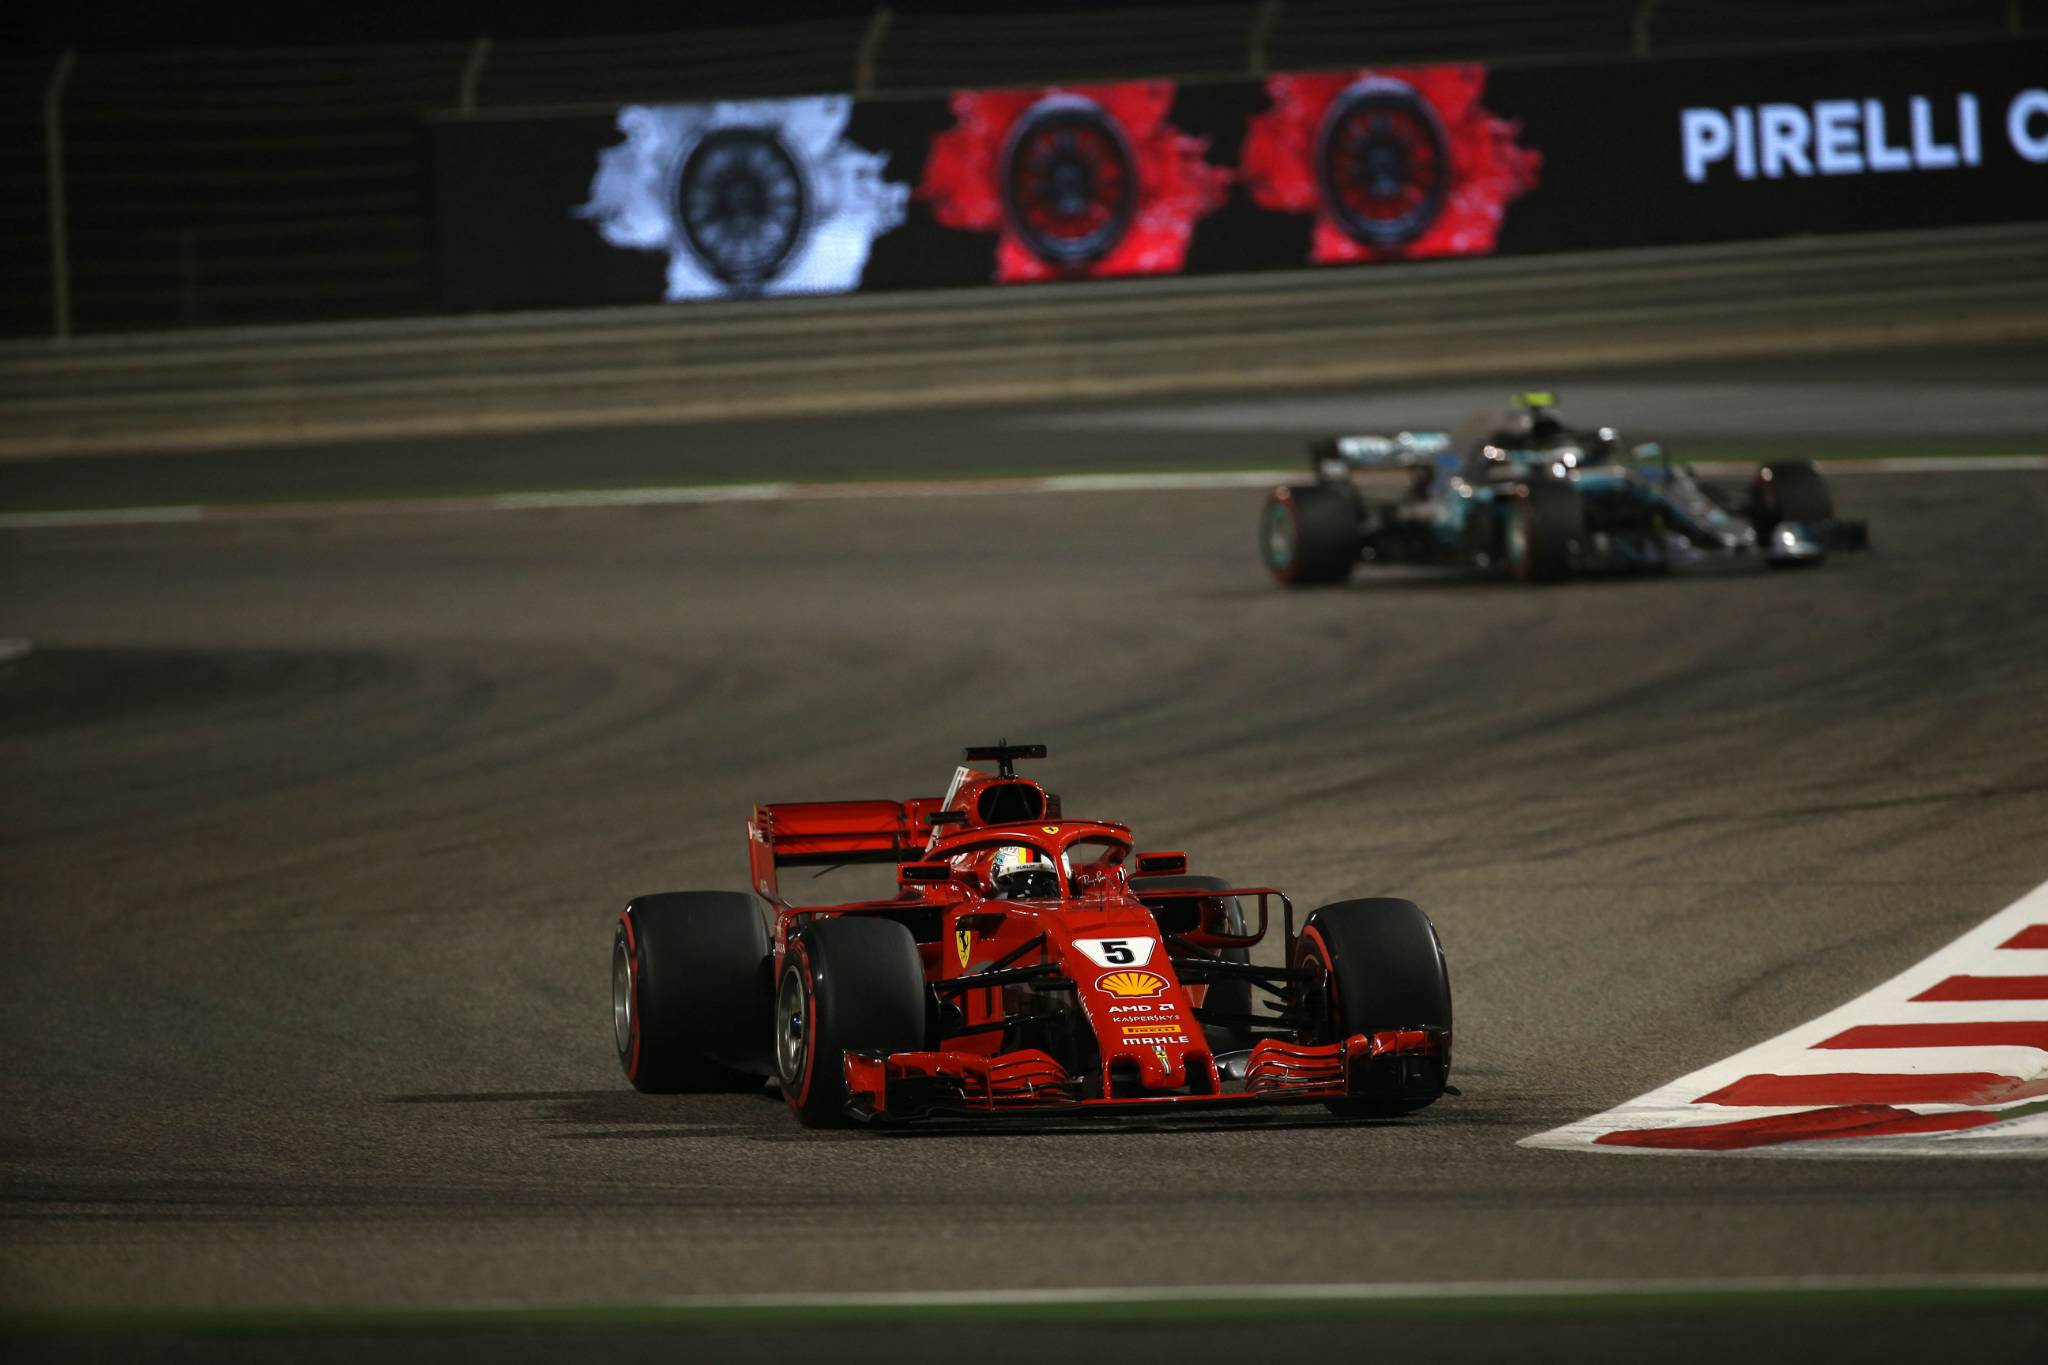 08.04.2018 - Race, Sebastian Vettel (GER) Scuderia Ferrari SF71H and Valtteri Bottas (FIN) Mercedes AMG F1 W09 